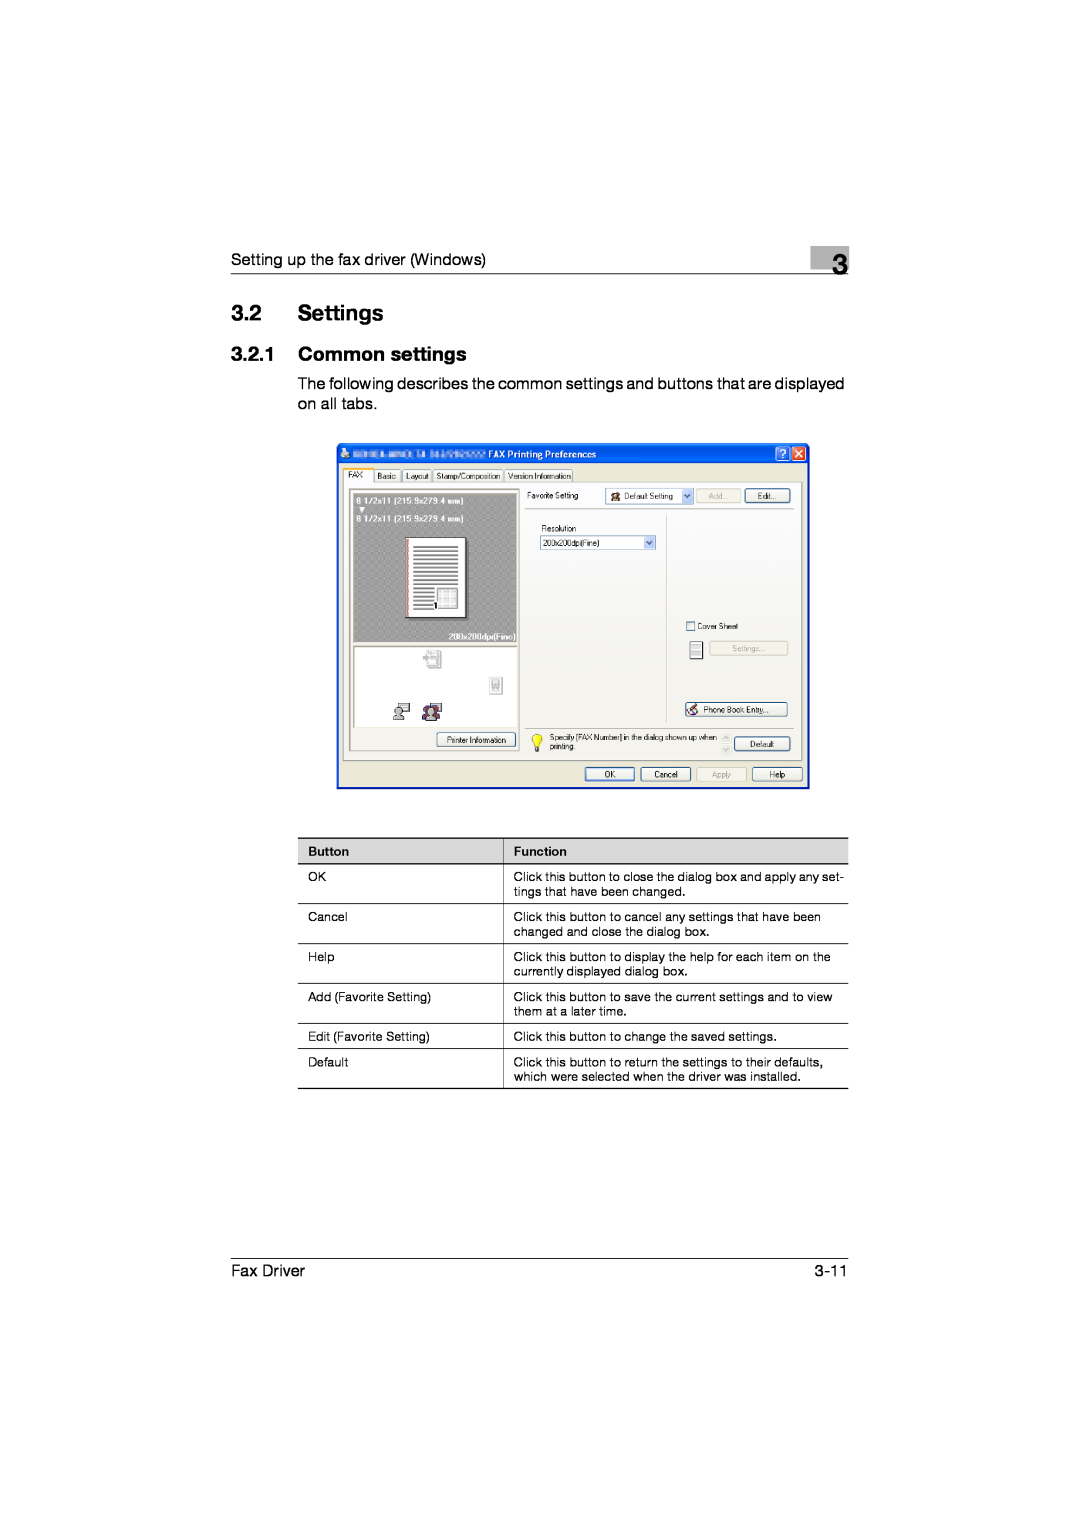 Konica Minolta 222, 282, 362 manual 3.2Settings, 3.2.1Common settings, Button, Function 